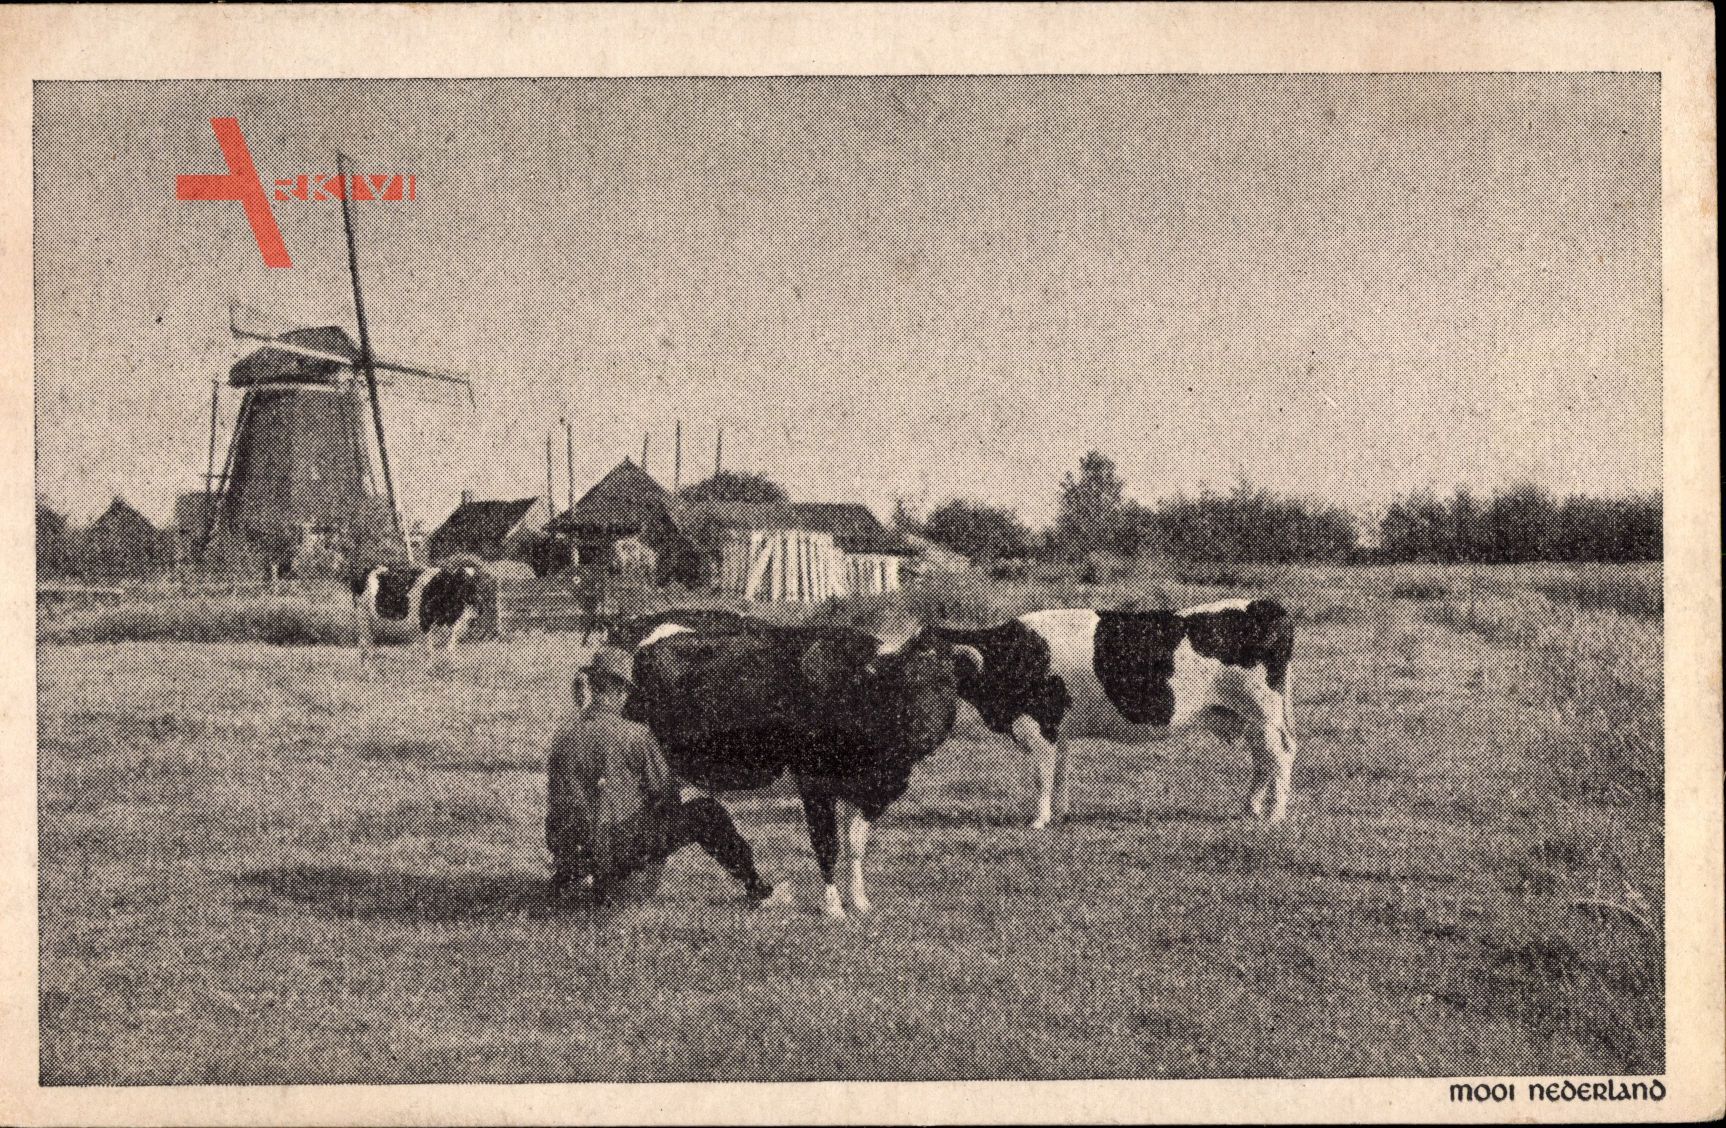 Niederlande, Mooi Nederland, Windmühle, Bauer melkt Kuh